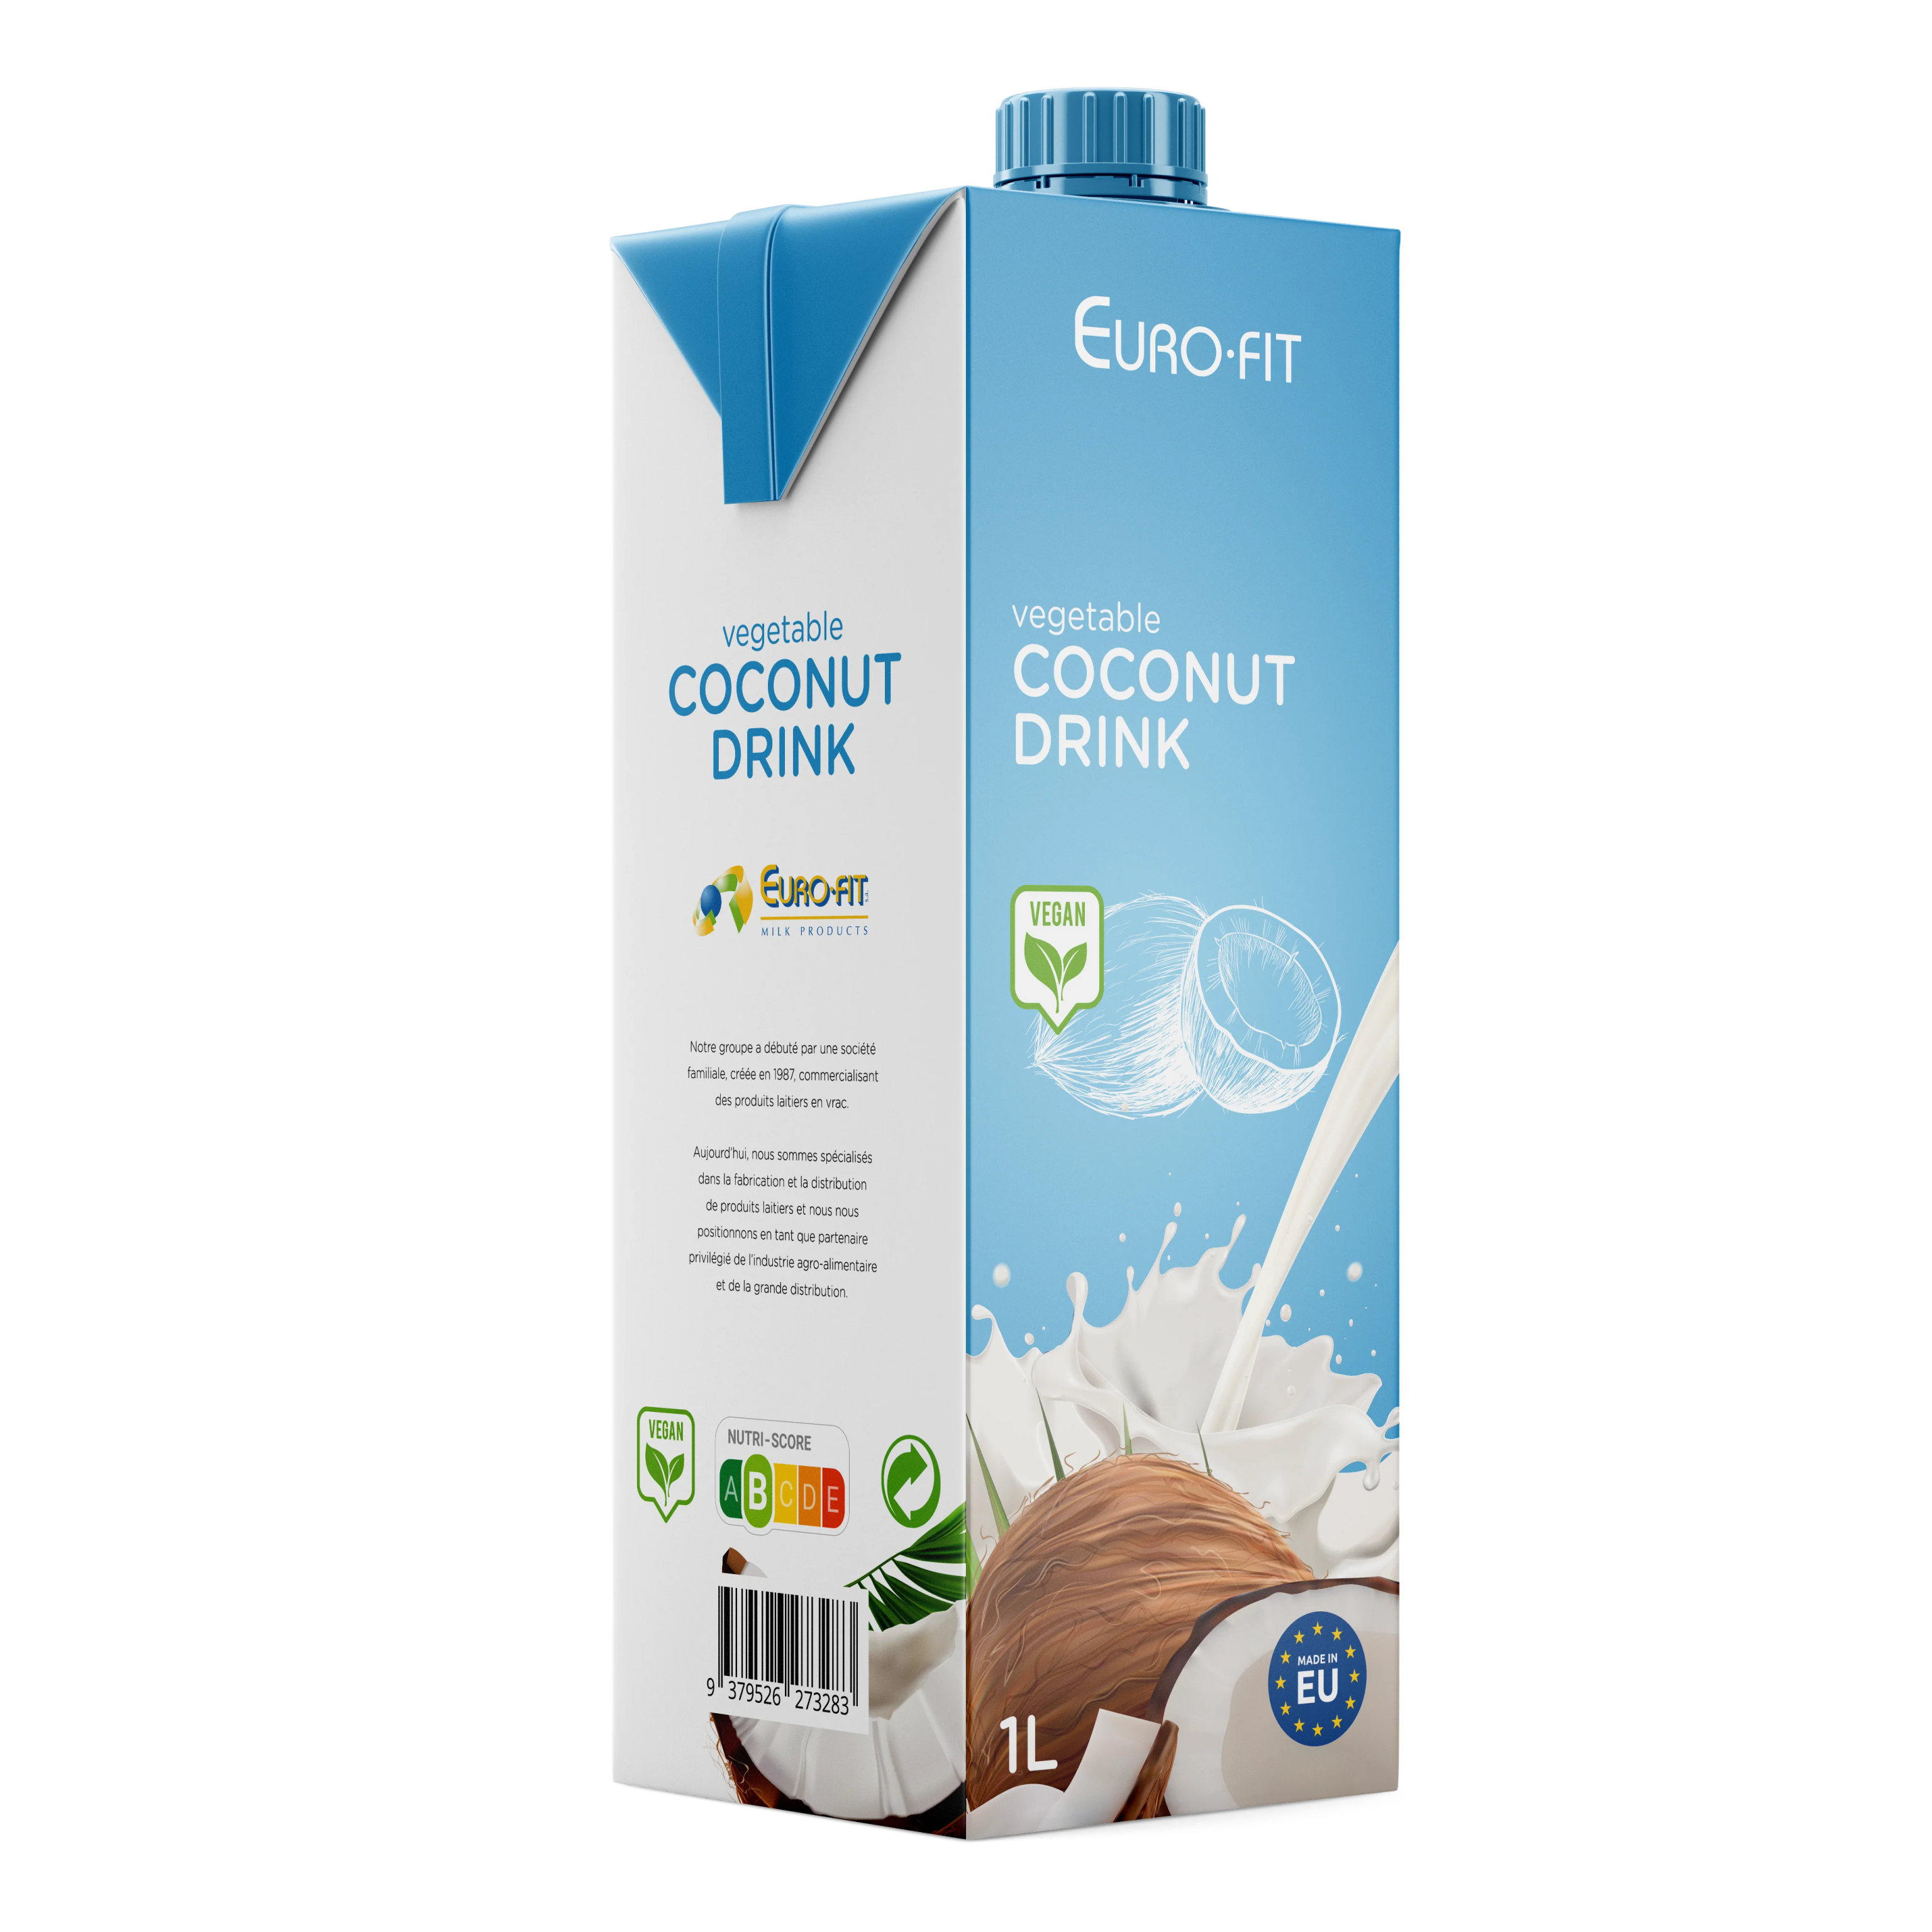 UHT coconut milk